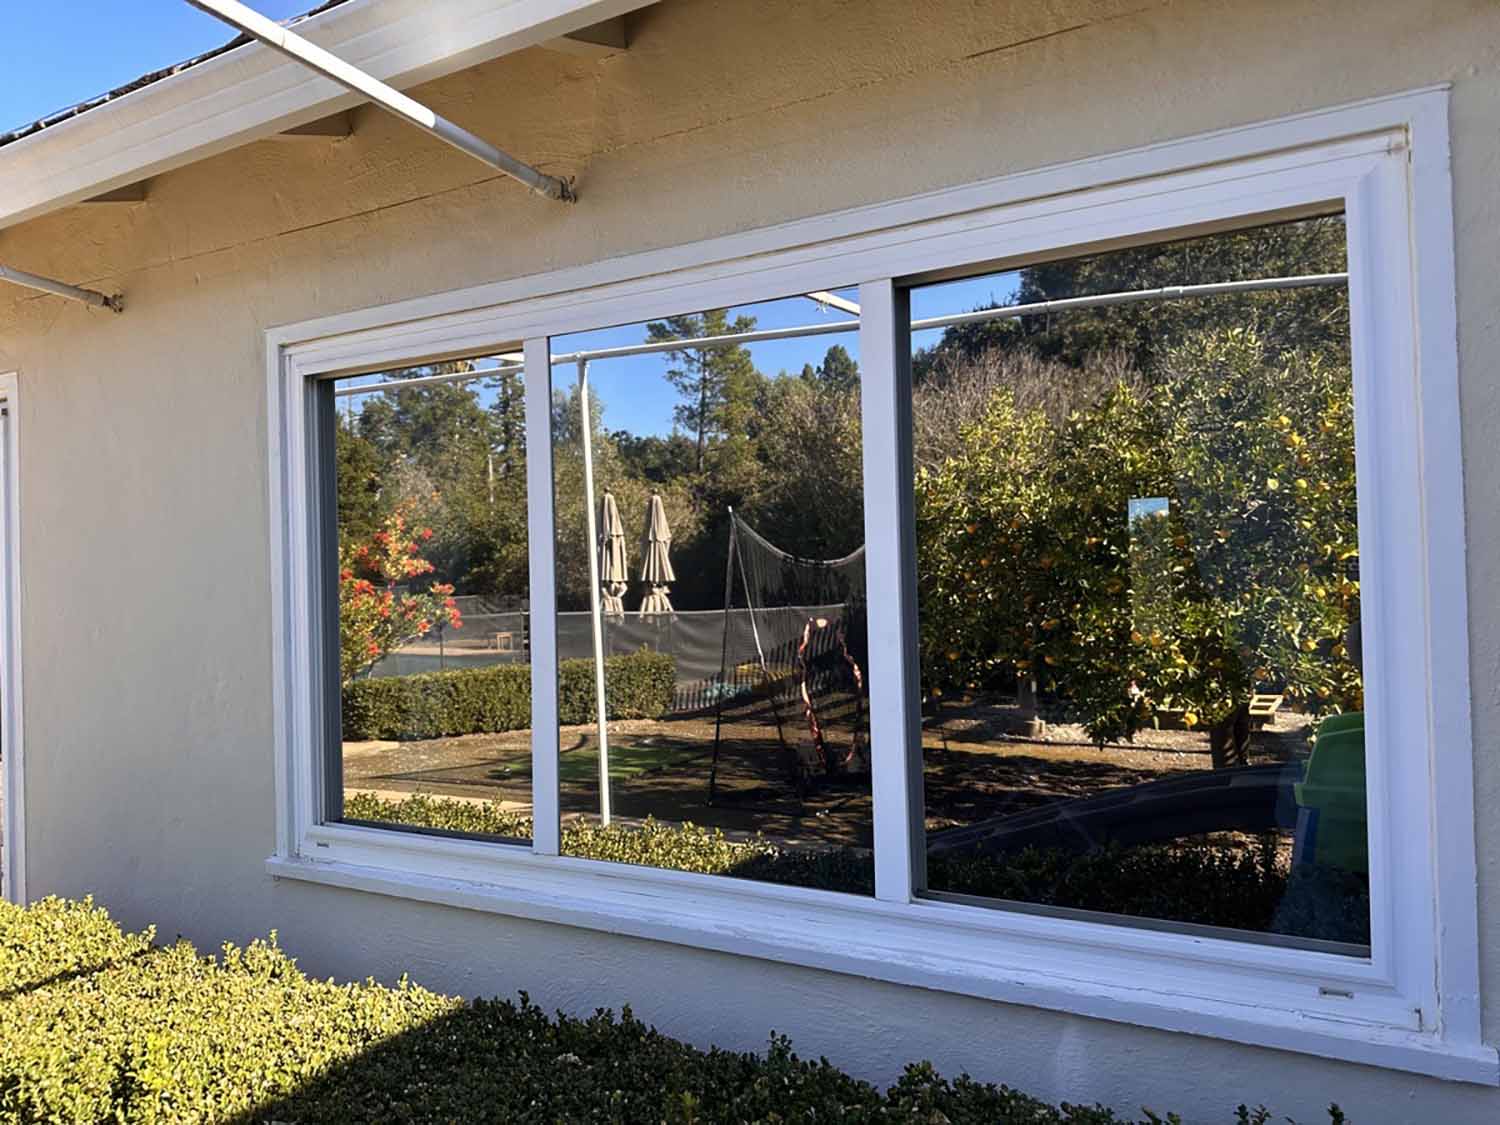 ClimatePro Installs Heat and Glare Reducing Window Film in Los Altos Hills. Get a free estimate in the San Francisco Bay Area.